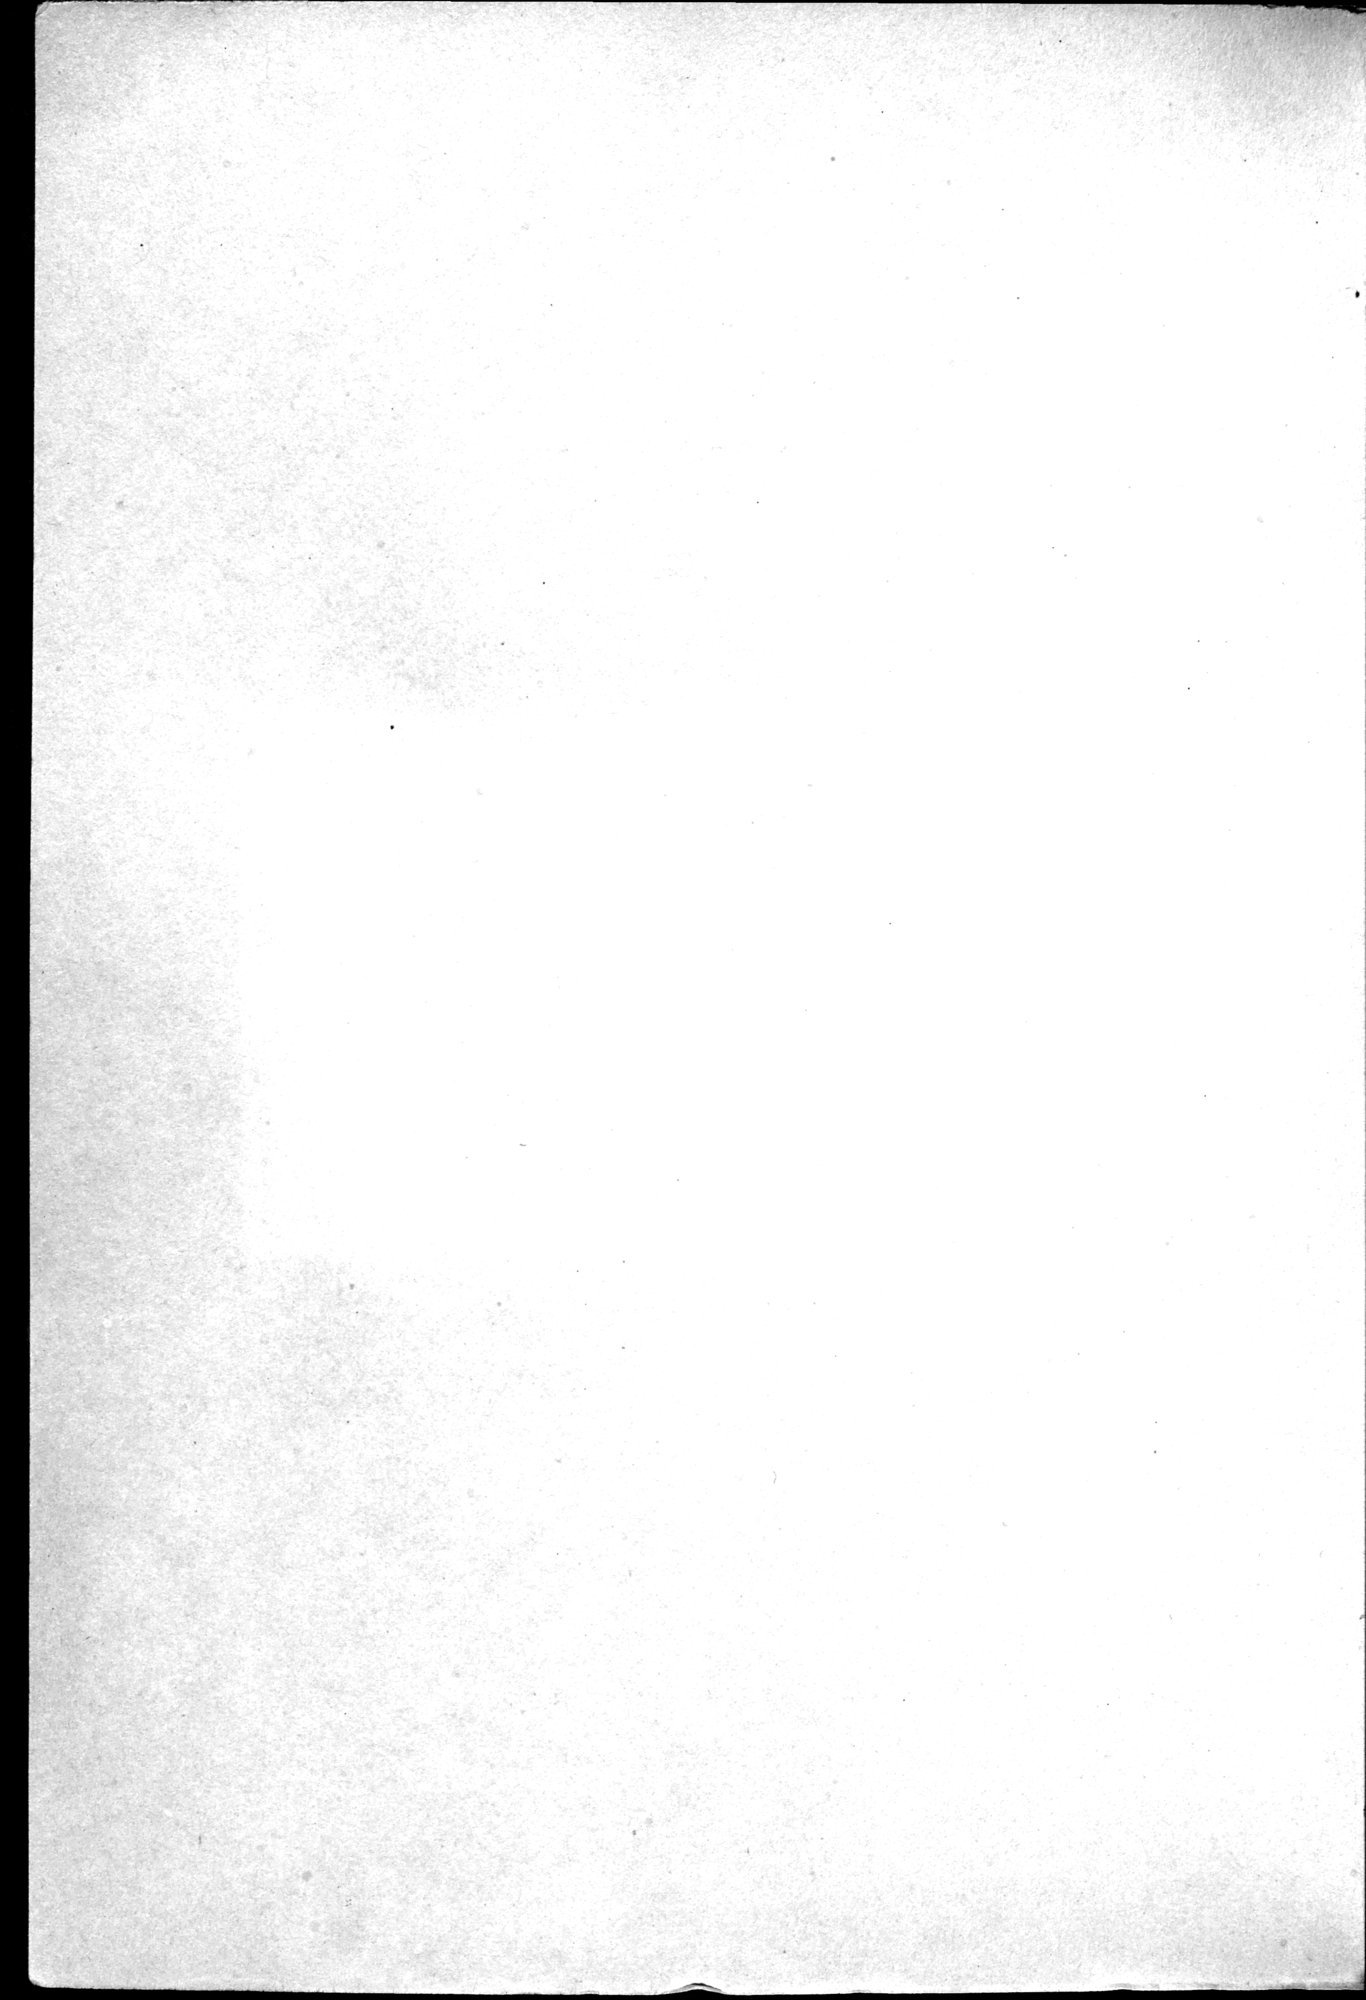 Den Vandrande Sjön : vol.1 / Page 4 (Grayscale High Resolution Image)